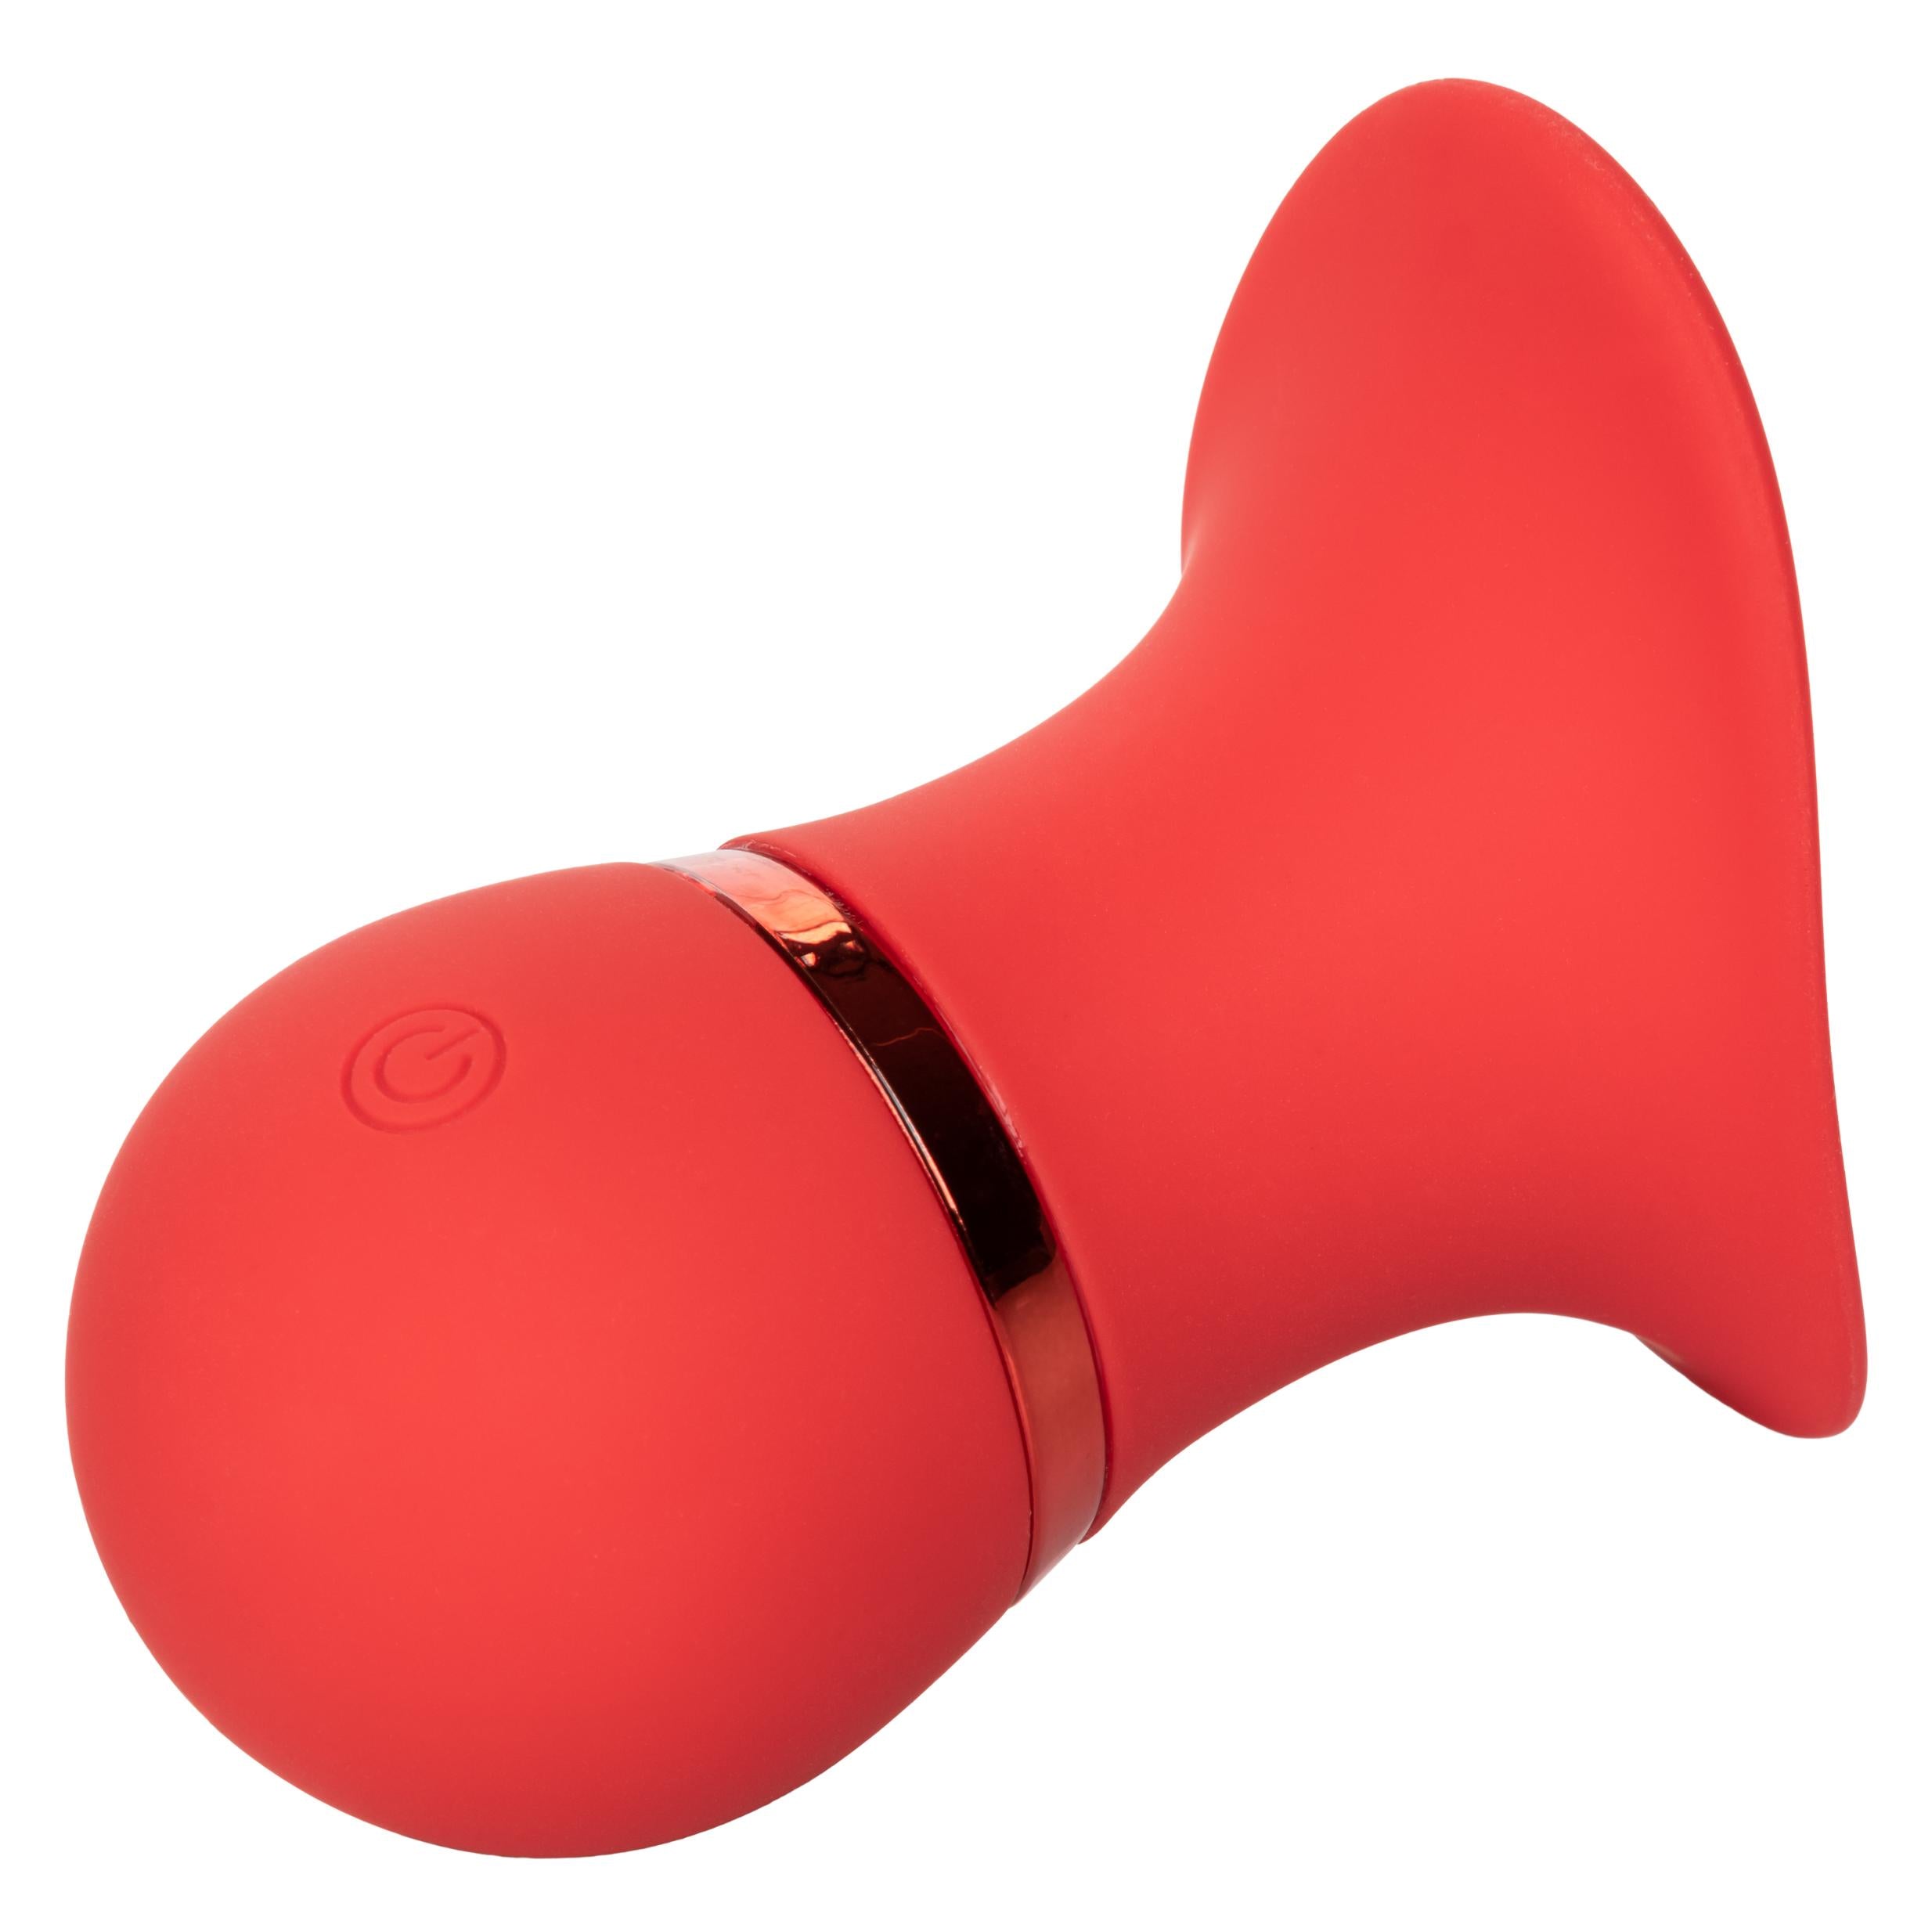 French Kiss Charmer Red Tongue Vibrator